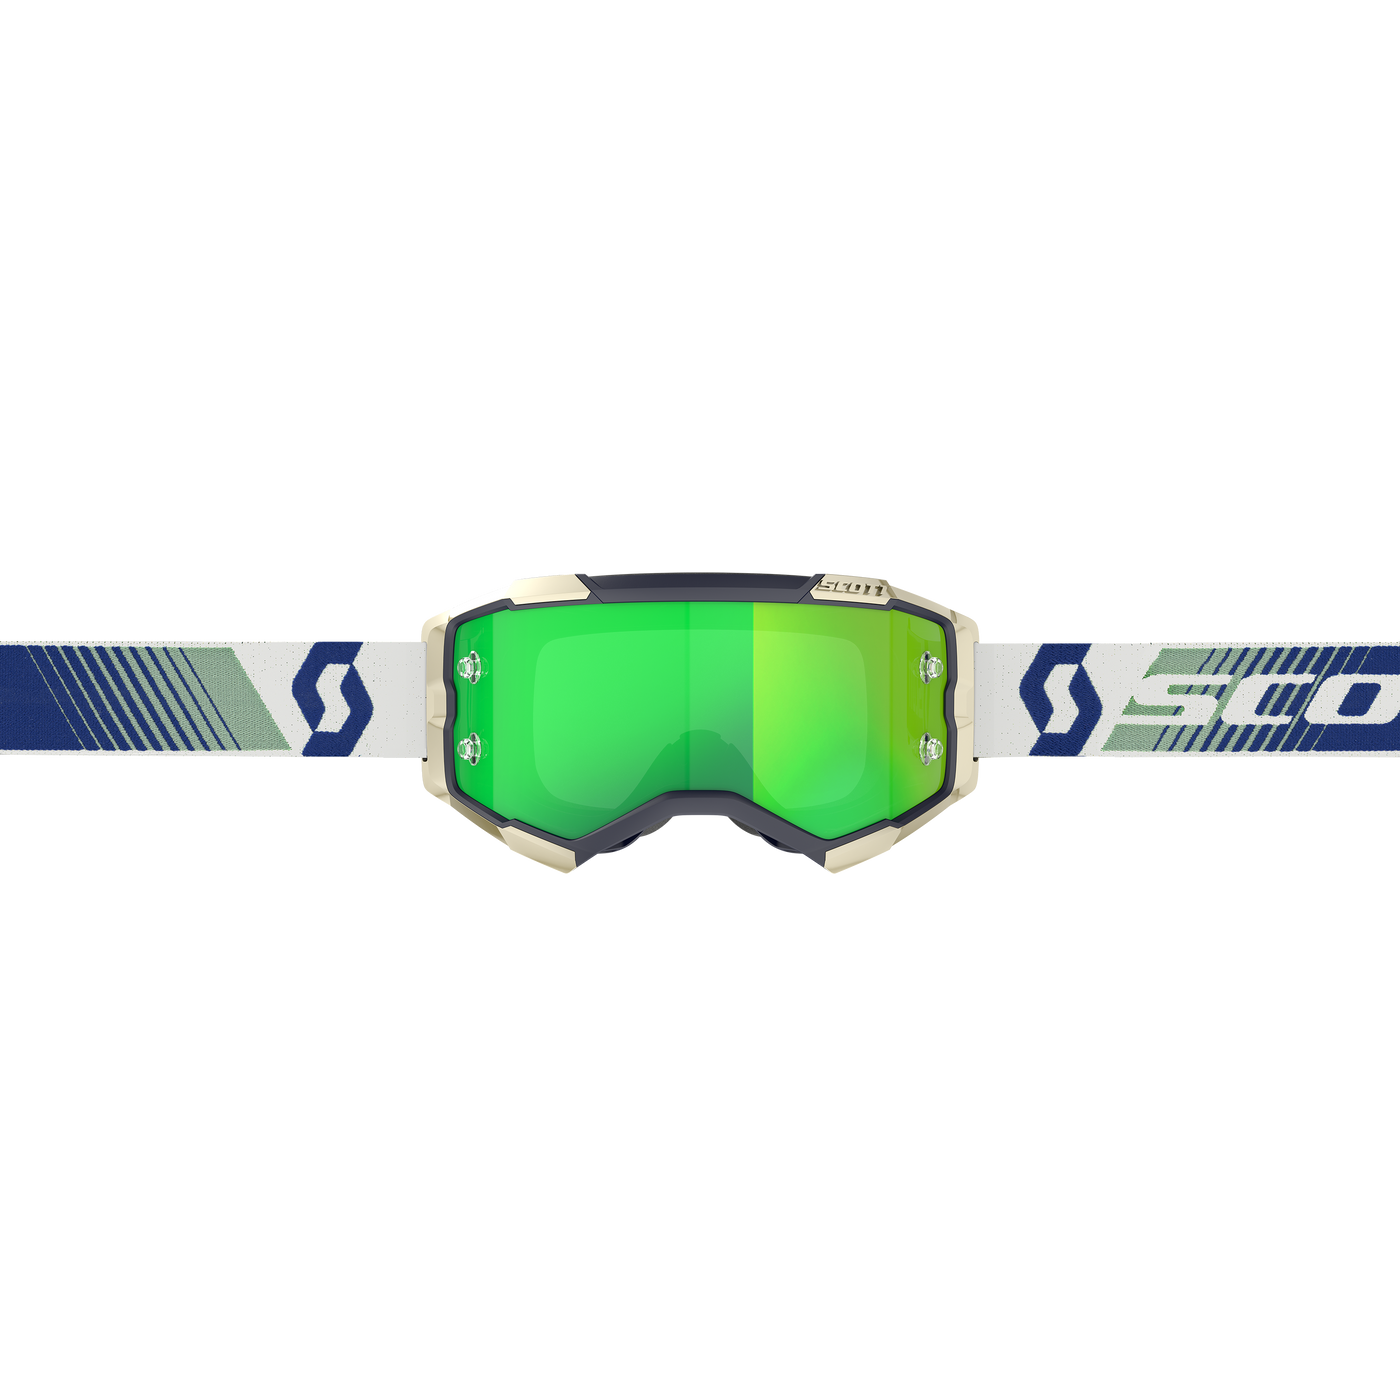 Scott Fury Goggles, Blue / Green - Green Chrome Works Lens